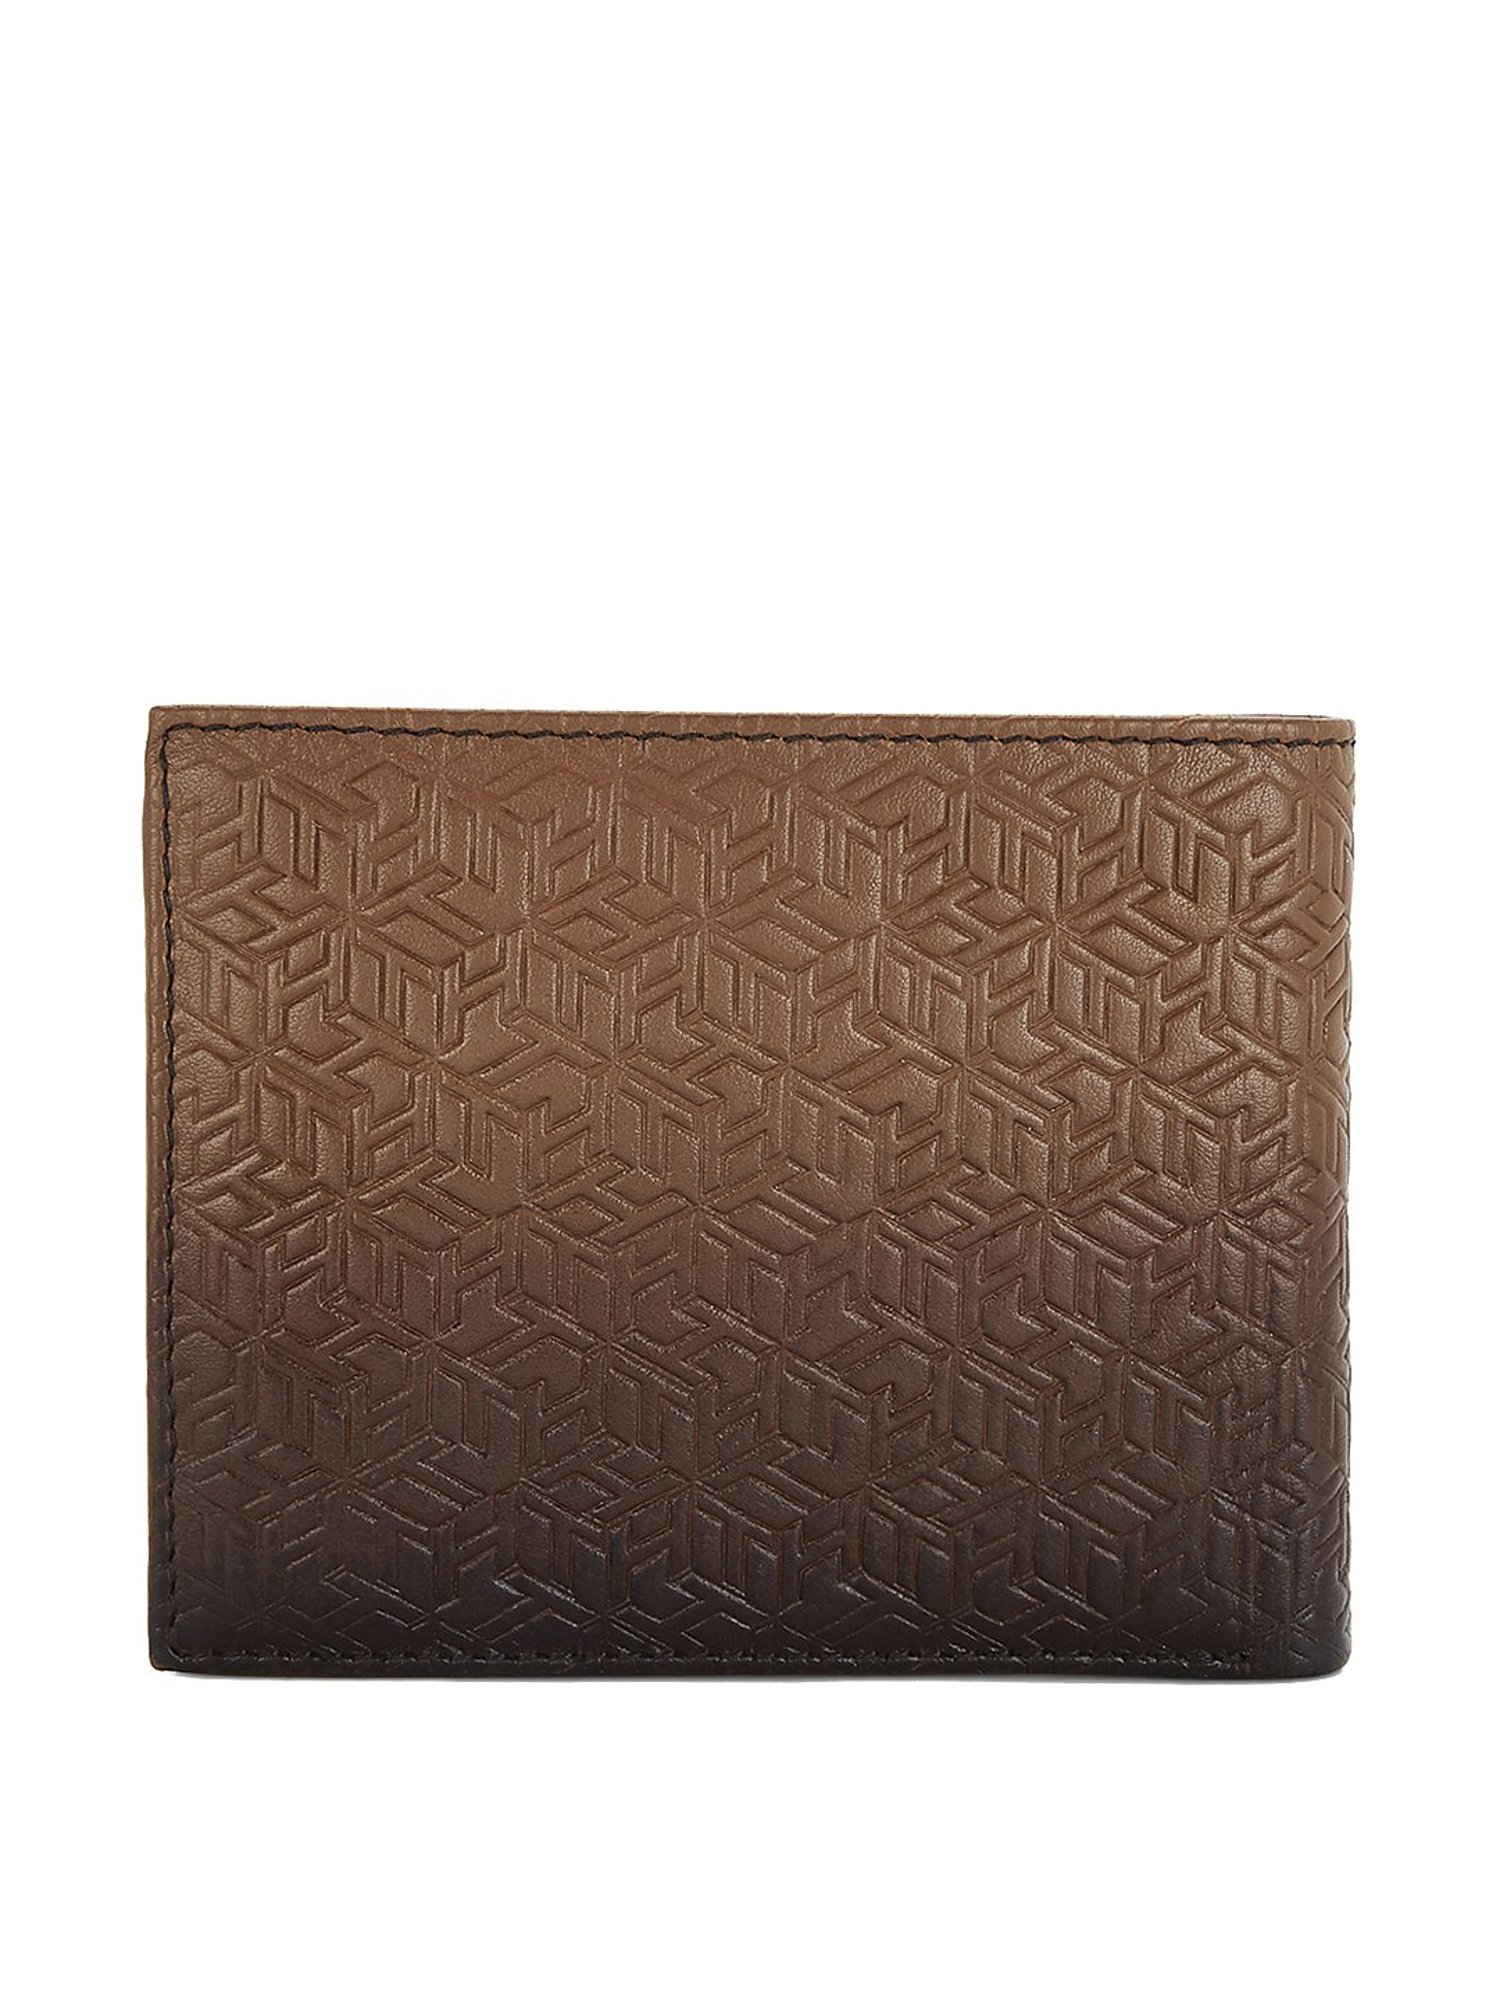 Louis Vuitton Dark Brown Leather Monogram Embossed Bifold Wallet